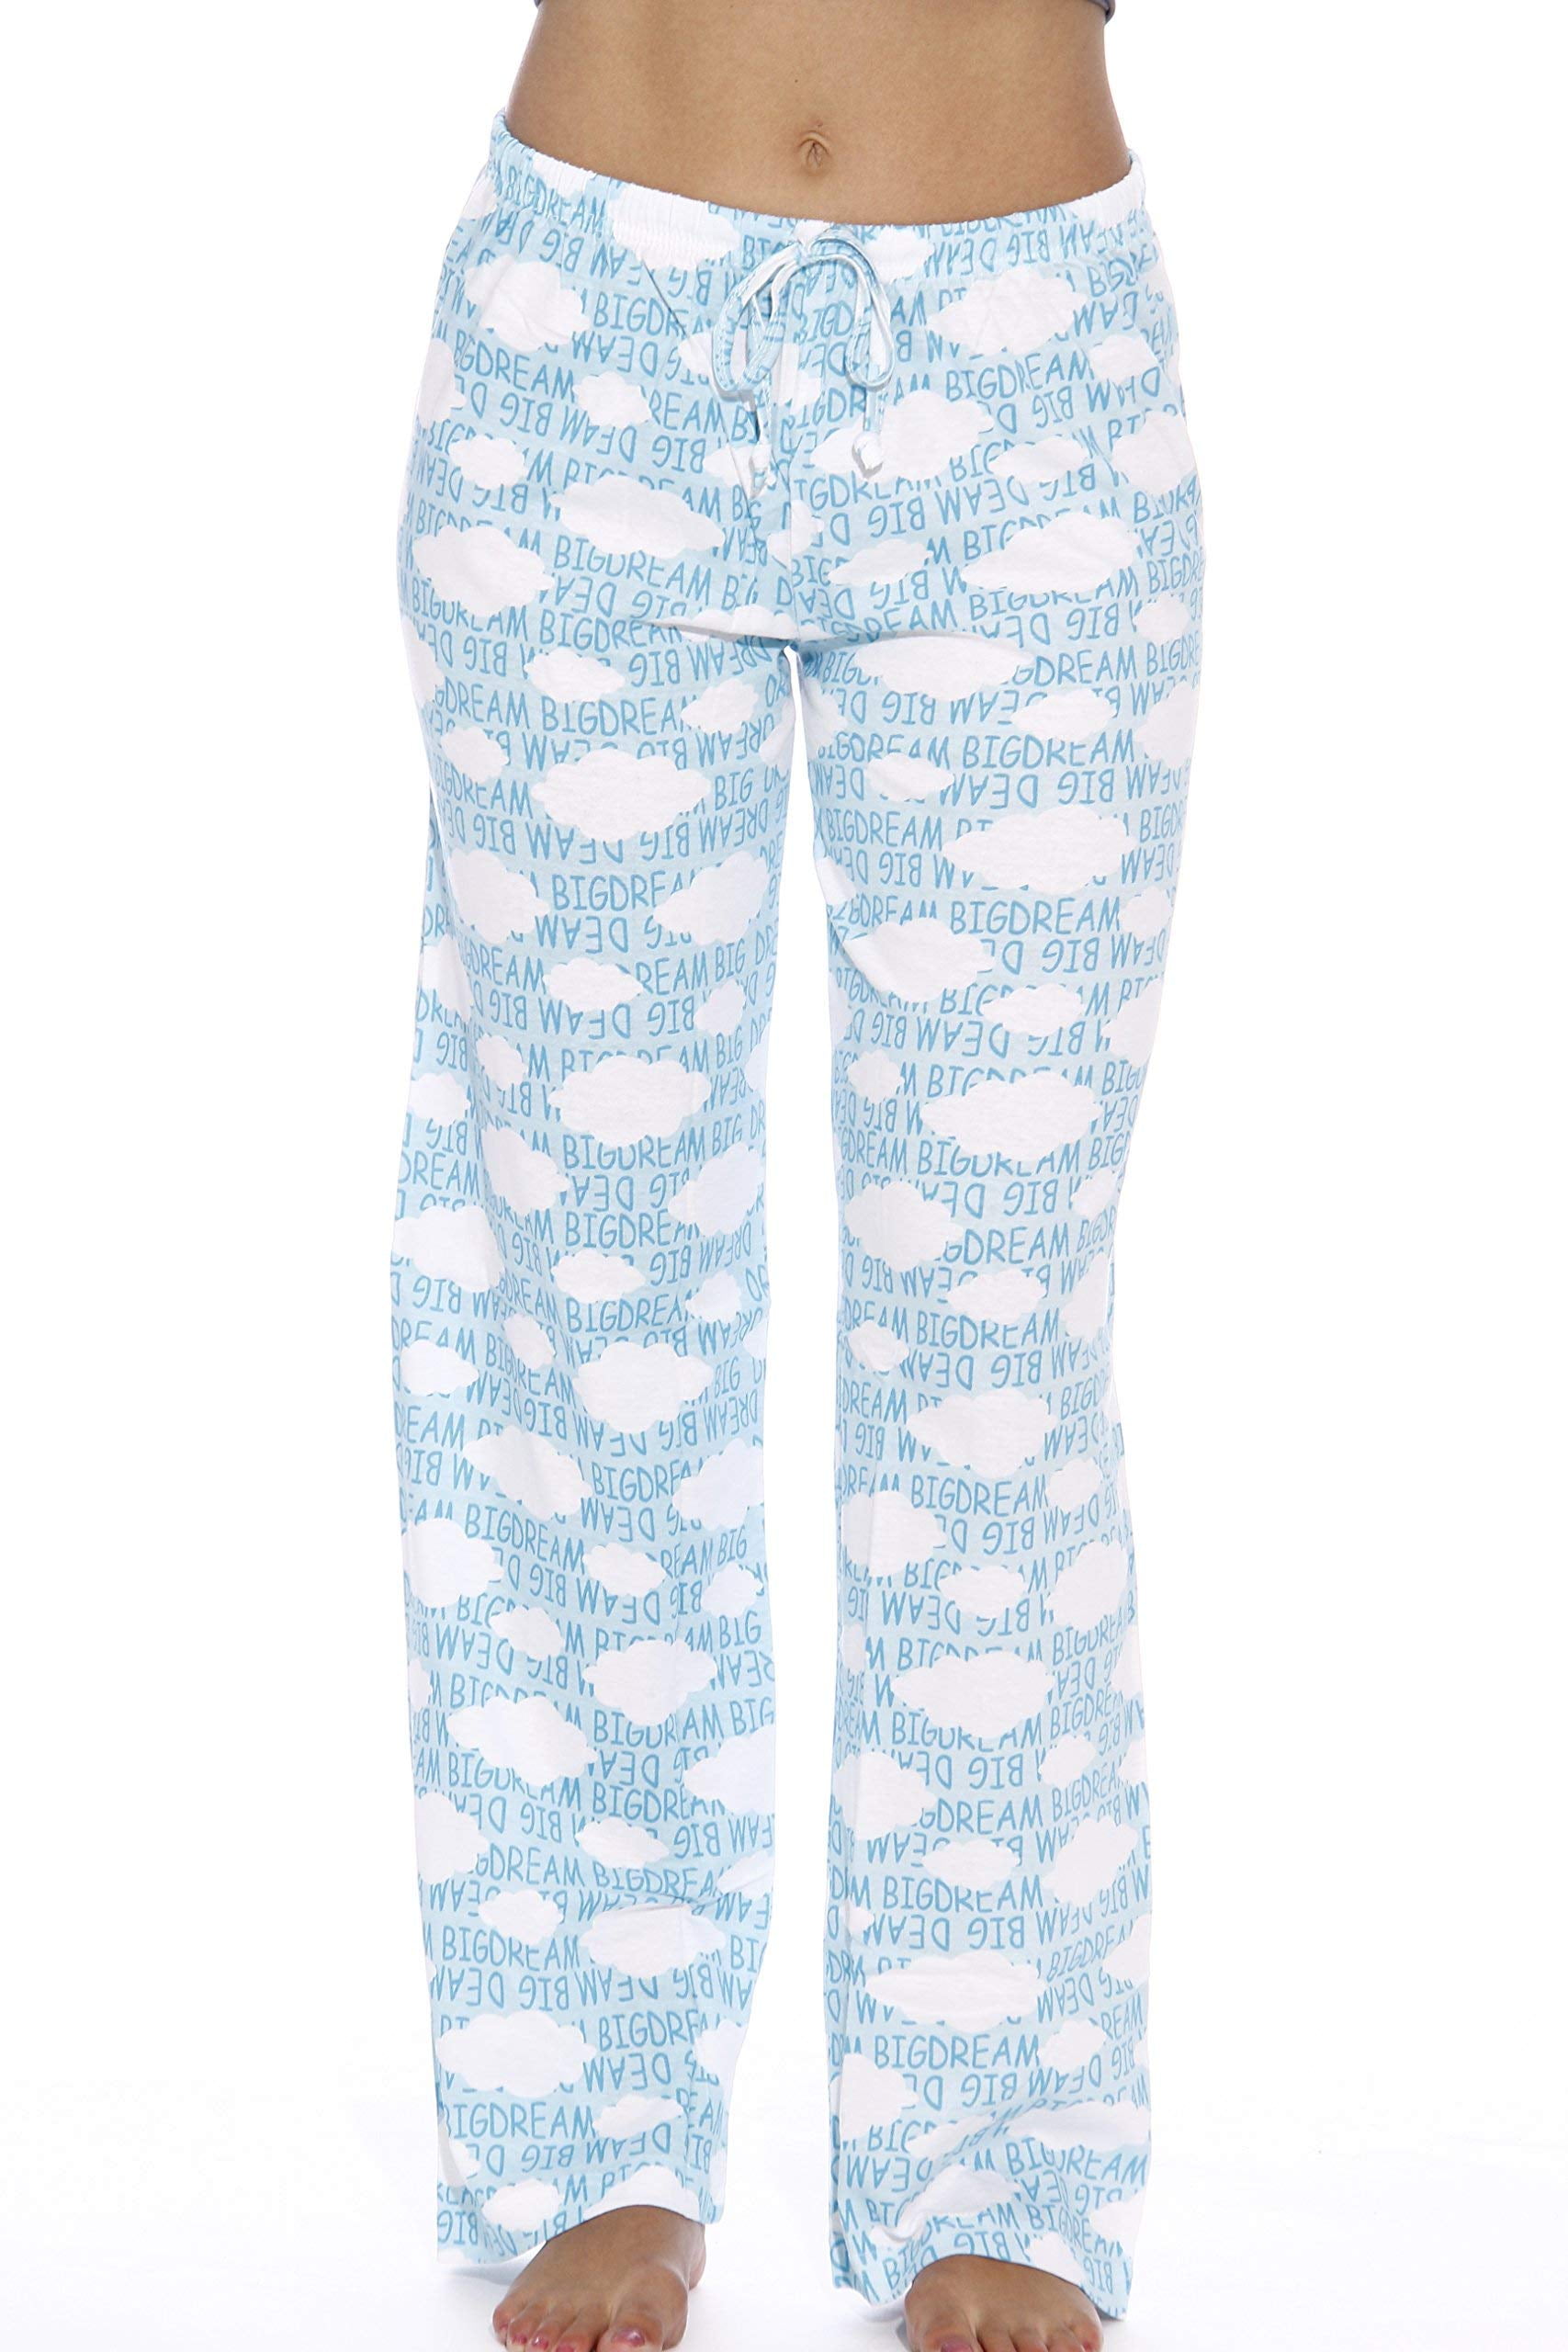 Just Love Women Pajama Pants / Sleepwear / Holiday Prints (Hearts White,  Medium)